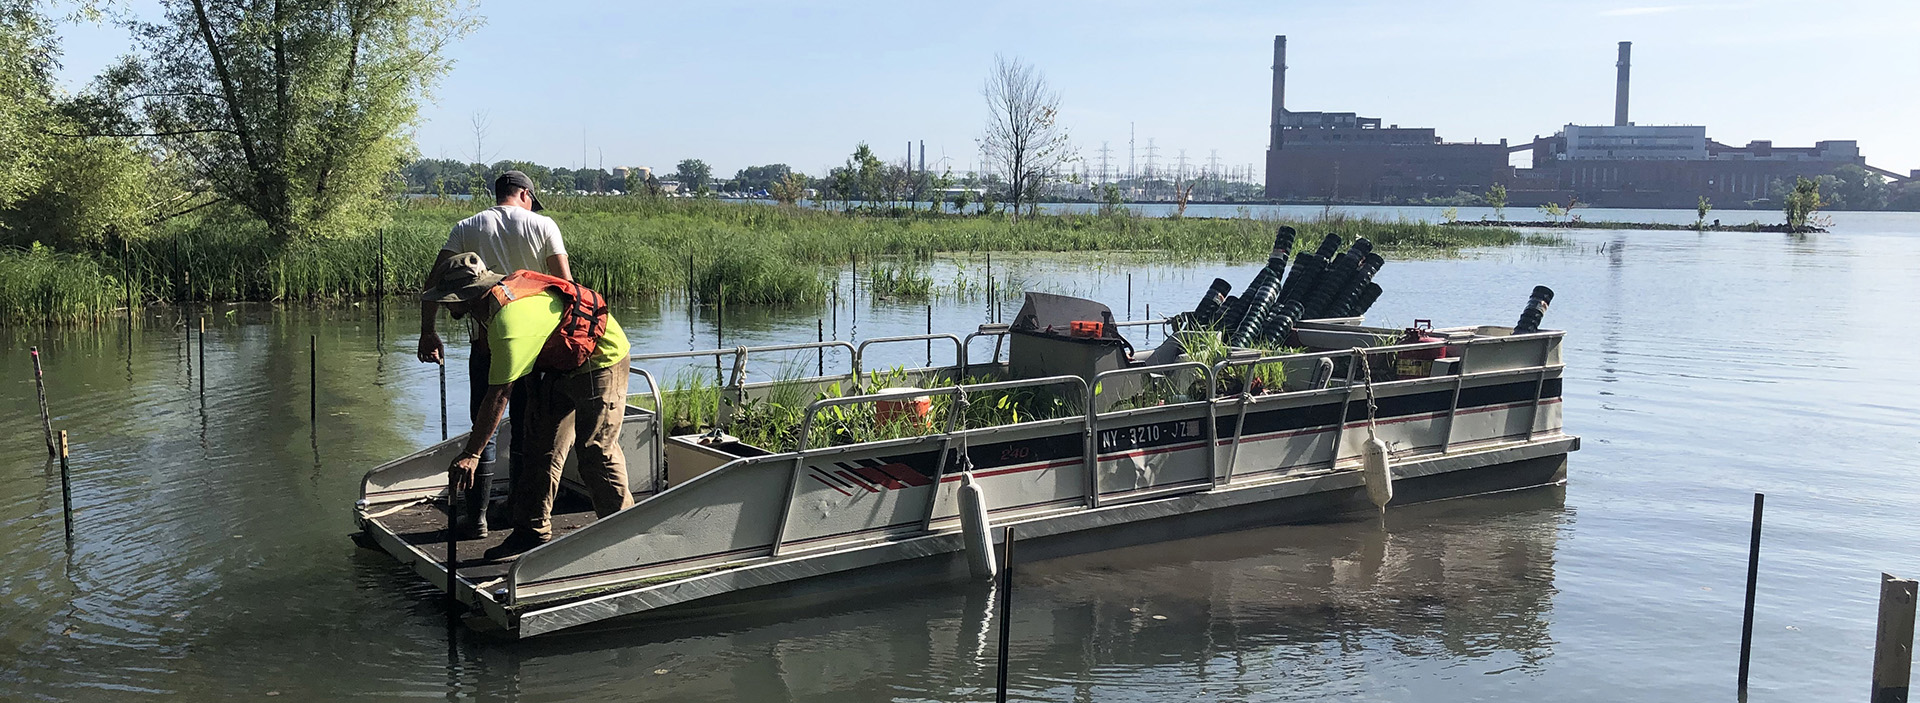 bnr_East River Marsh_Installing Emergent Aquatic Vegetation